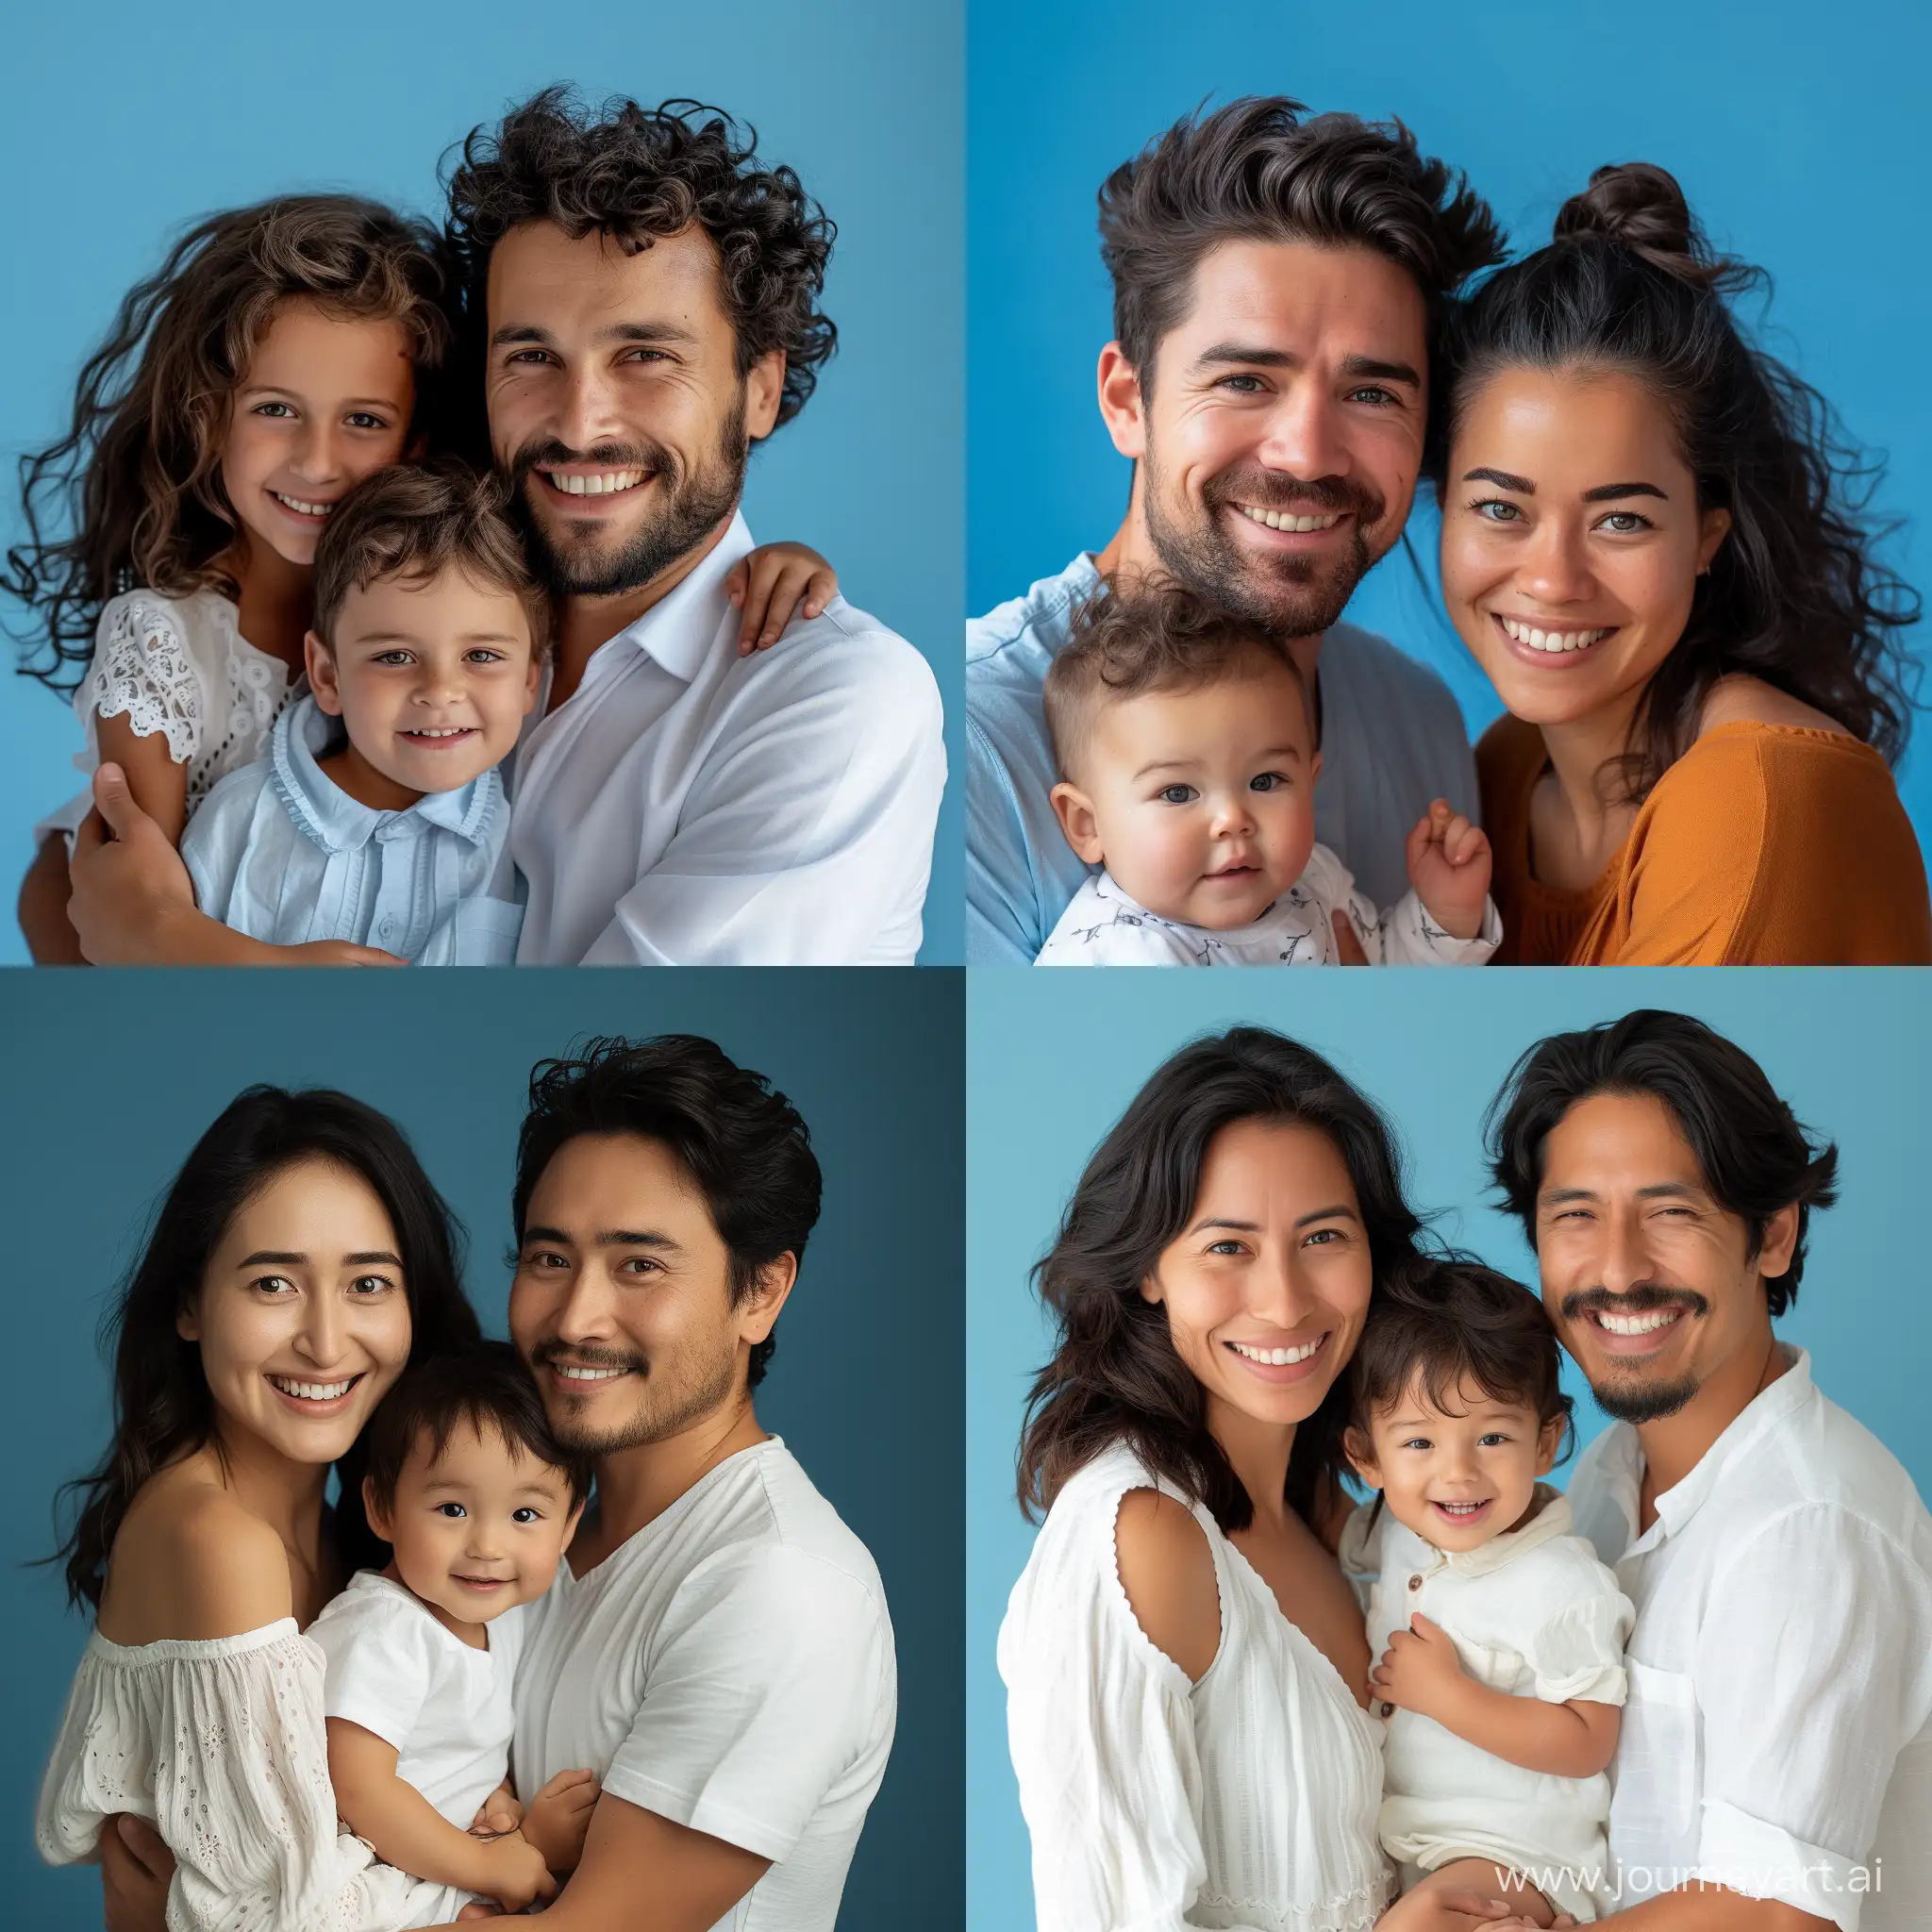 Joyful-DarkHaired-Family-Portrait-on-Blue-Background